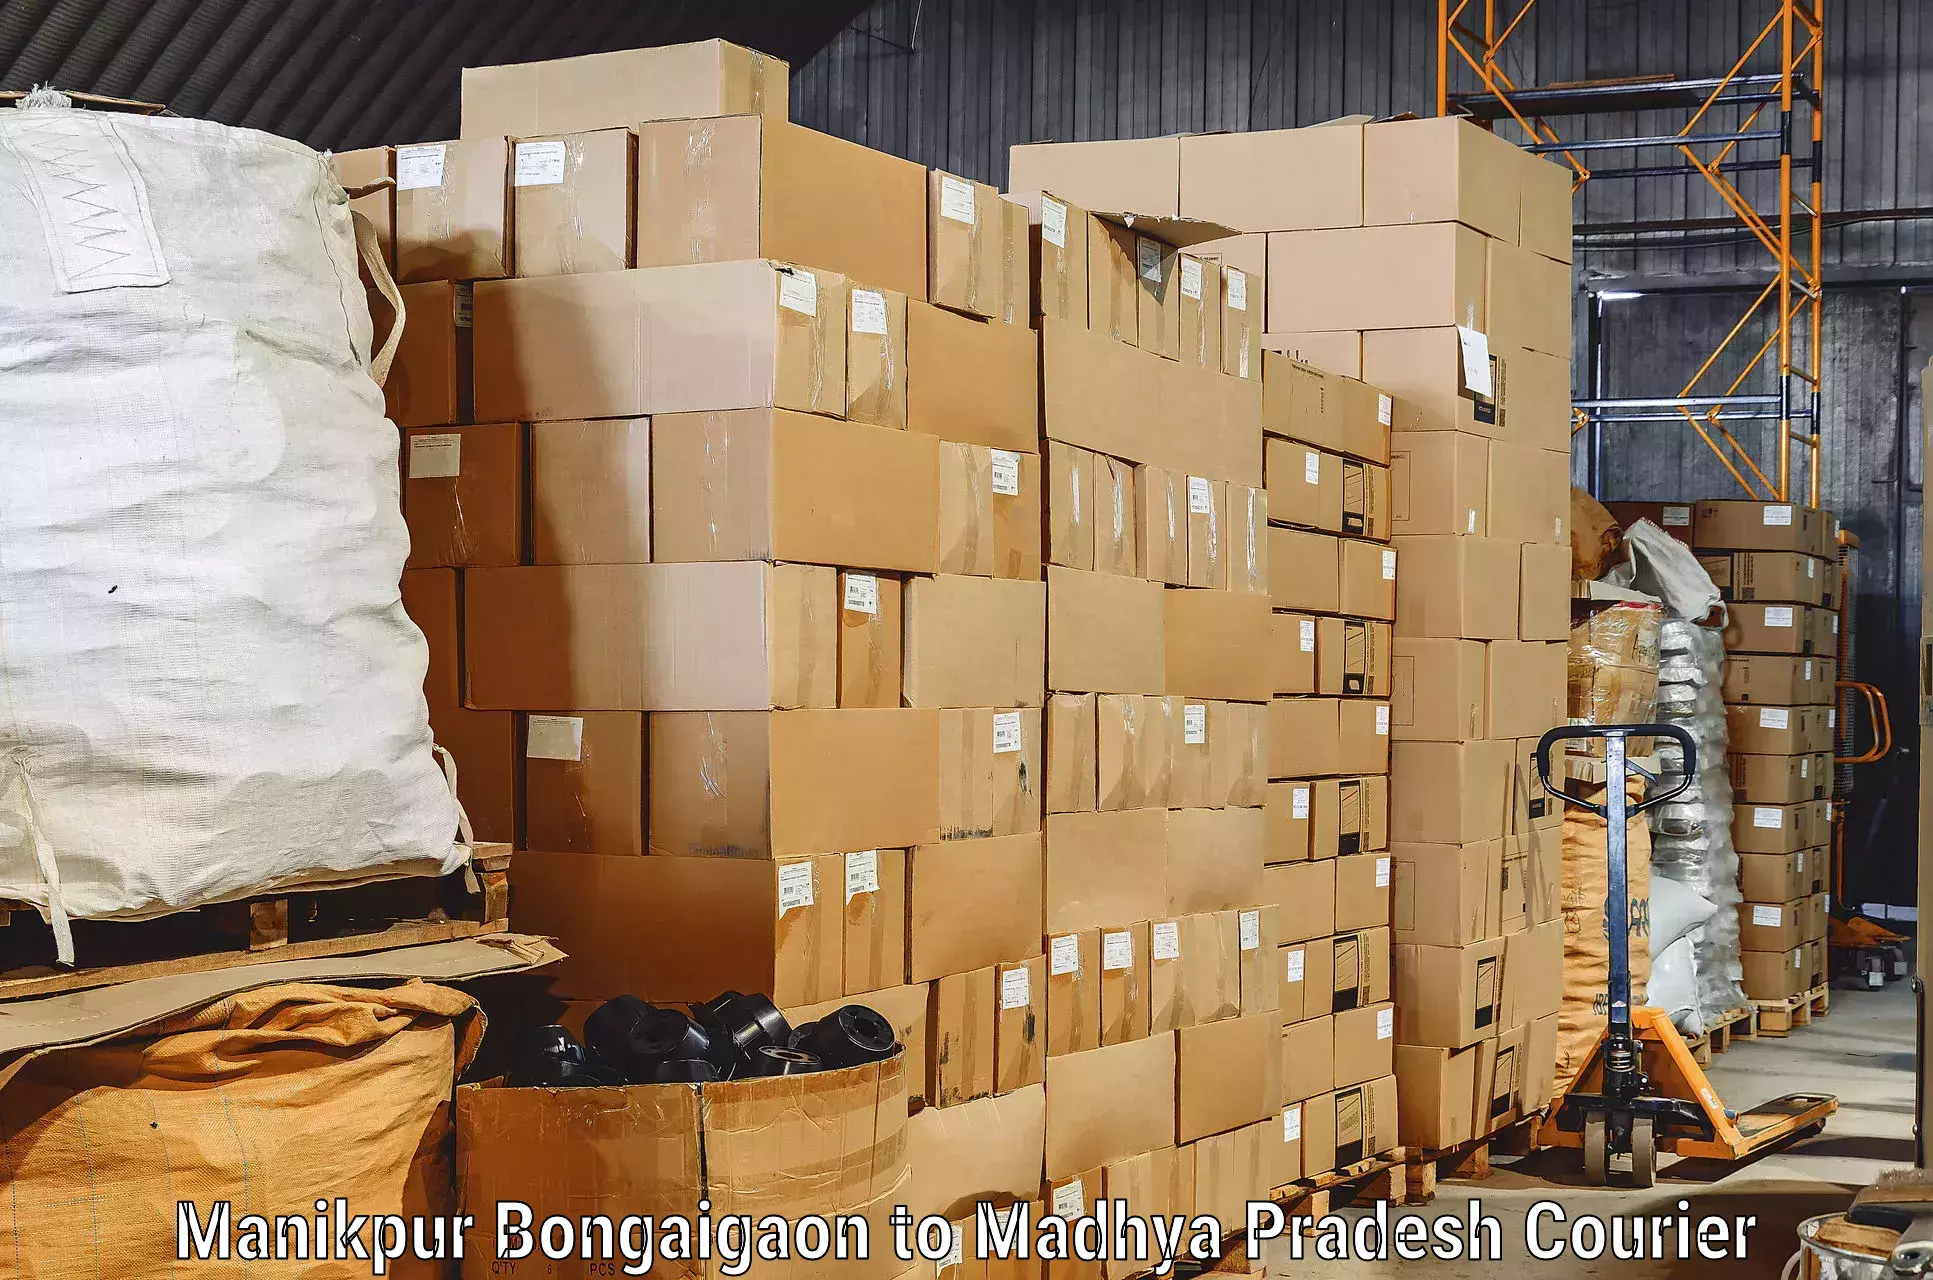 Moving and handling services Manikpur Bongaigaon to Rajendragram